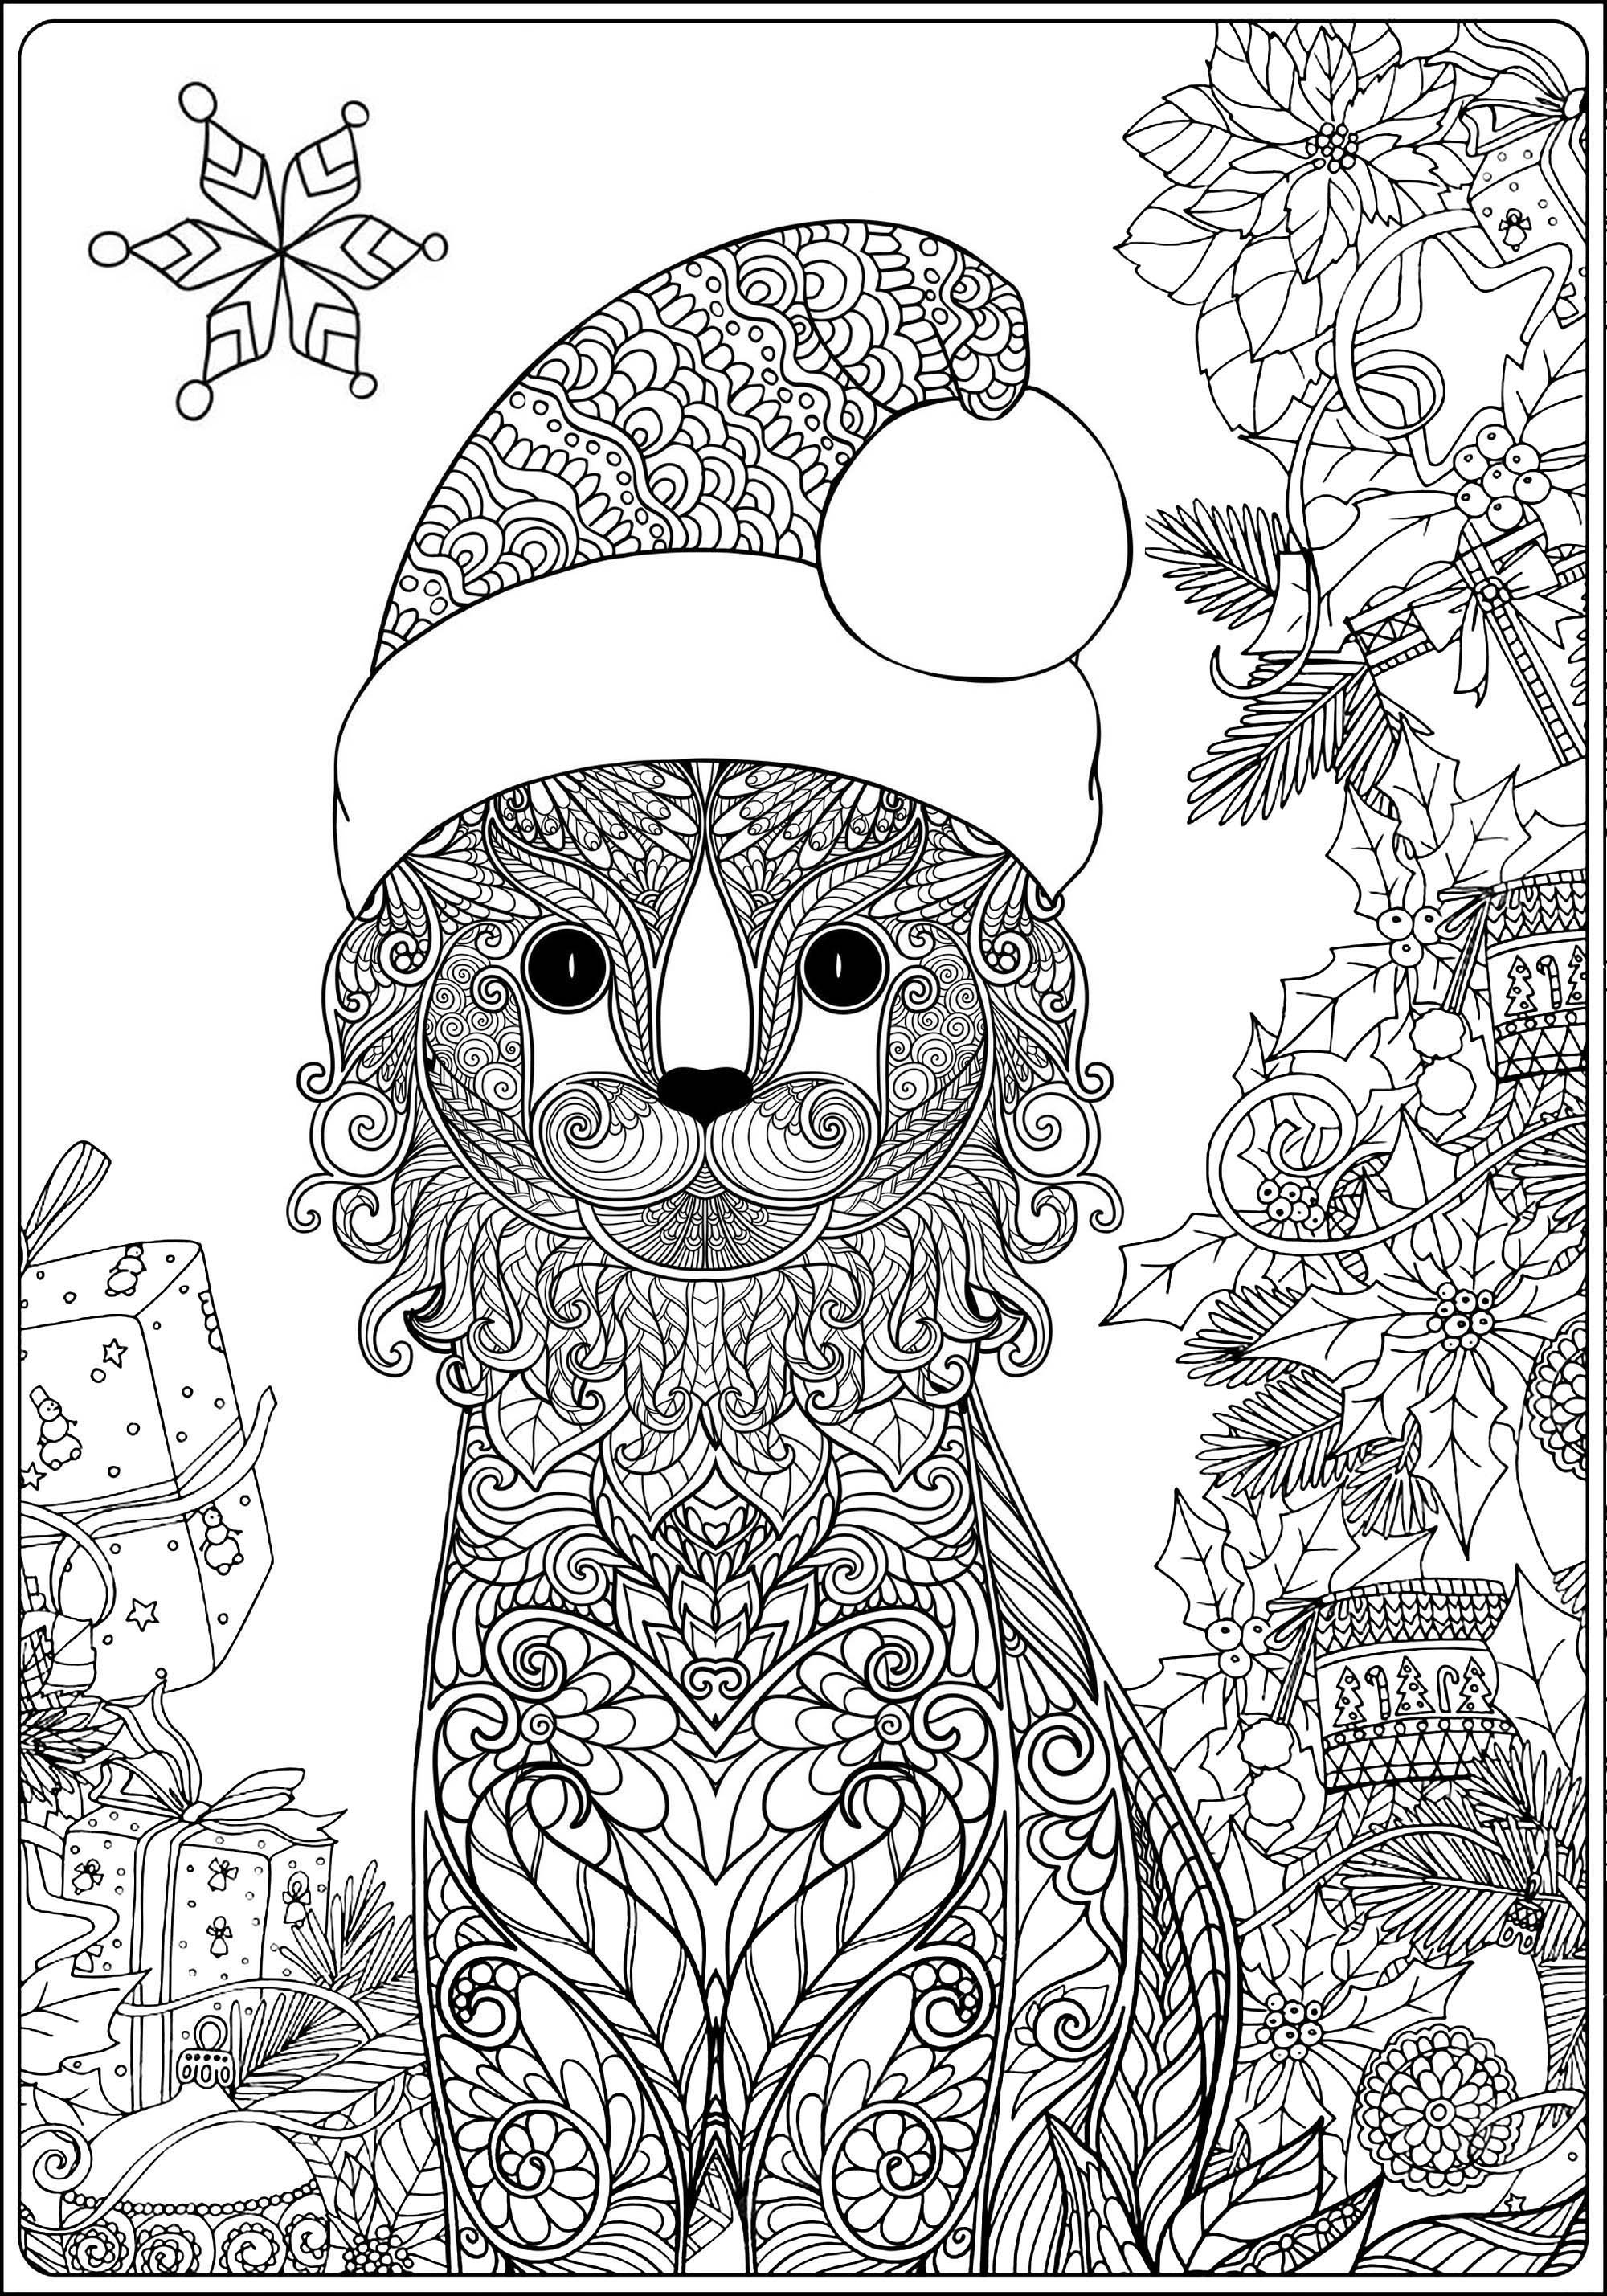 Colorear para Adultos : Navidad - 2, Origen : 123rf   Artista : Elena Besedina